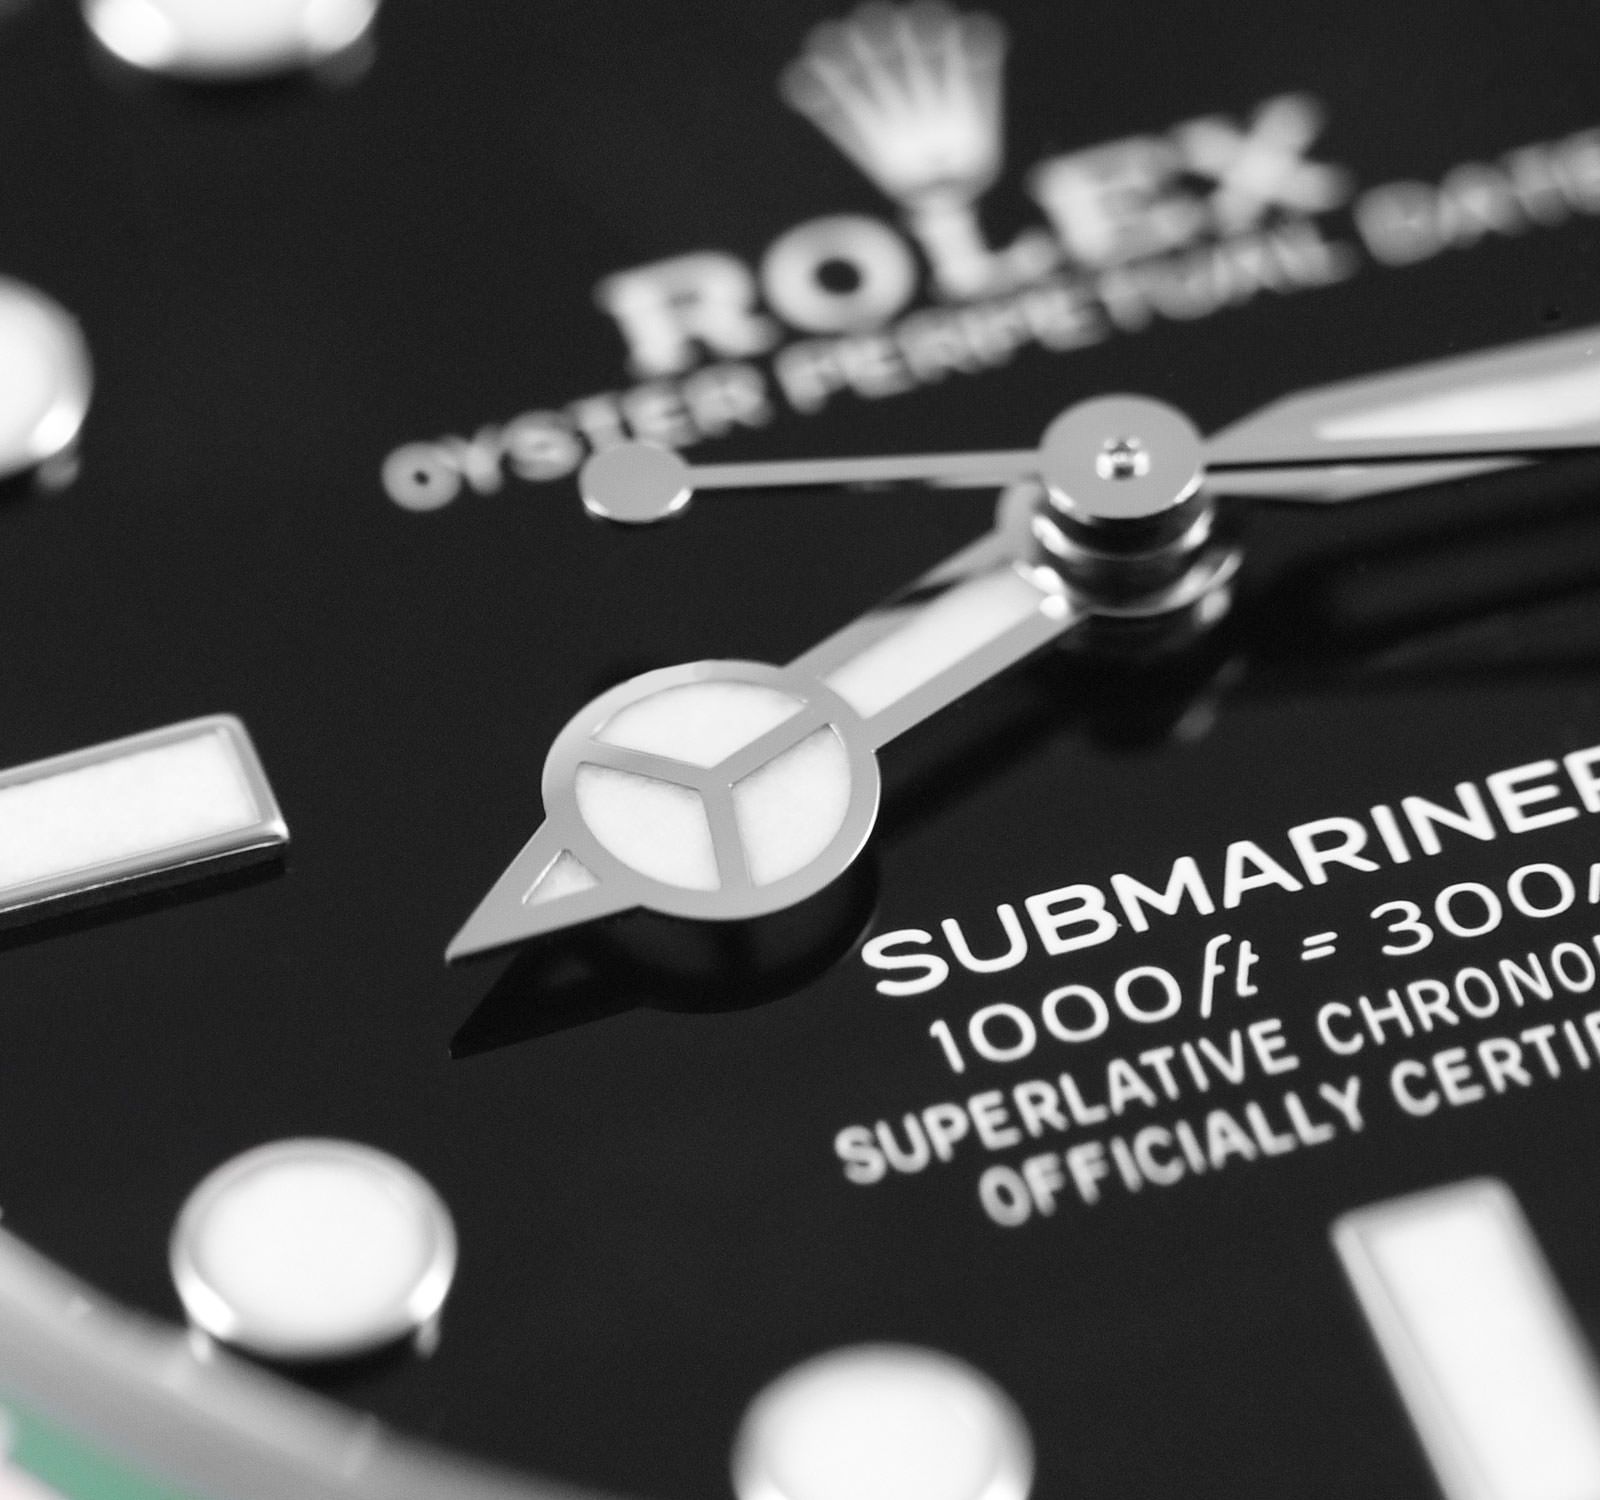 Rolex Submariner 126610 LV (Unworn) – The WatchPoint Ltd • Buy & Sell  Luxury Watches